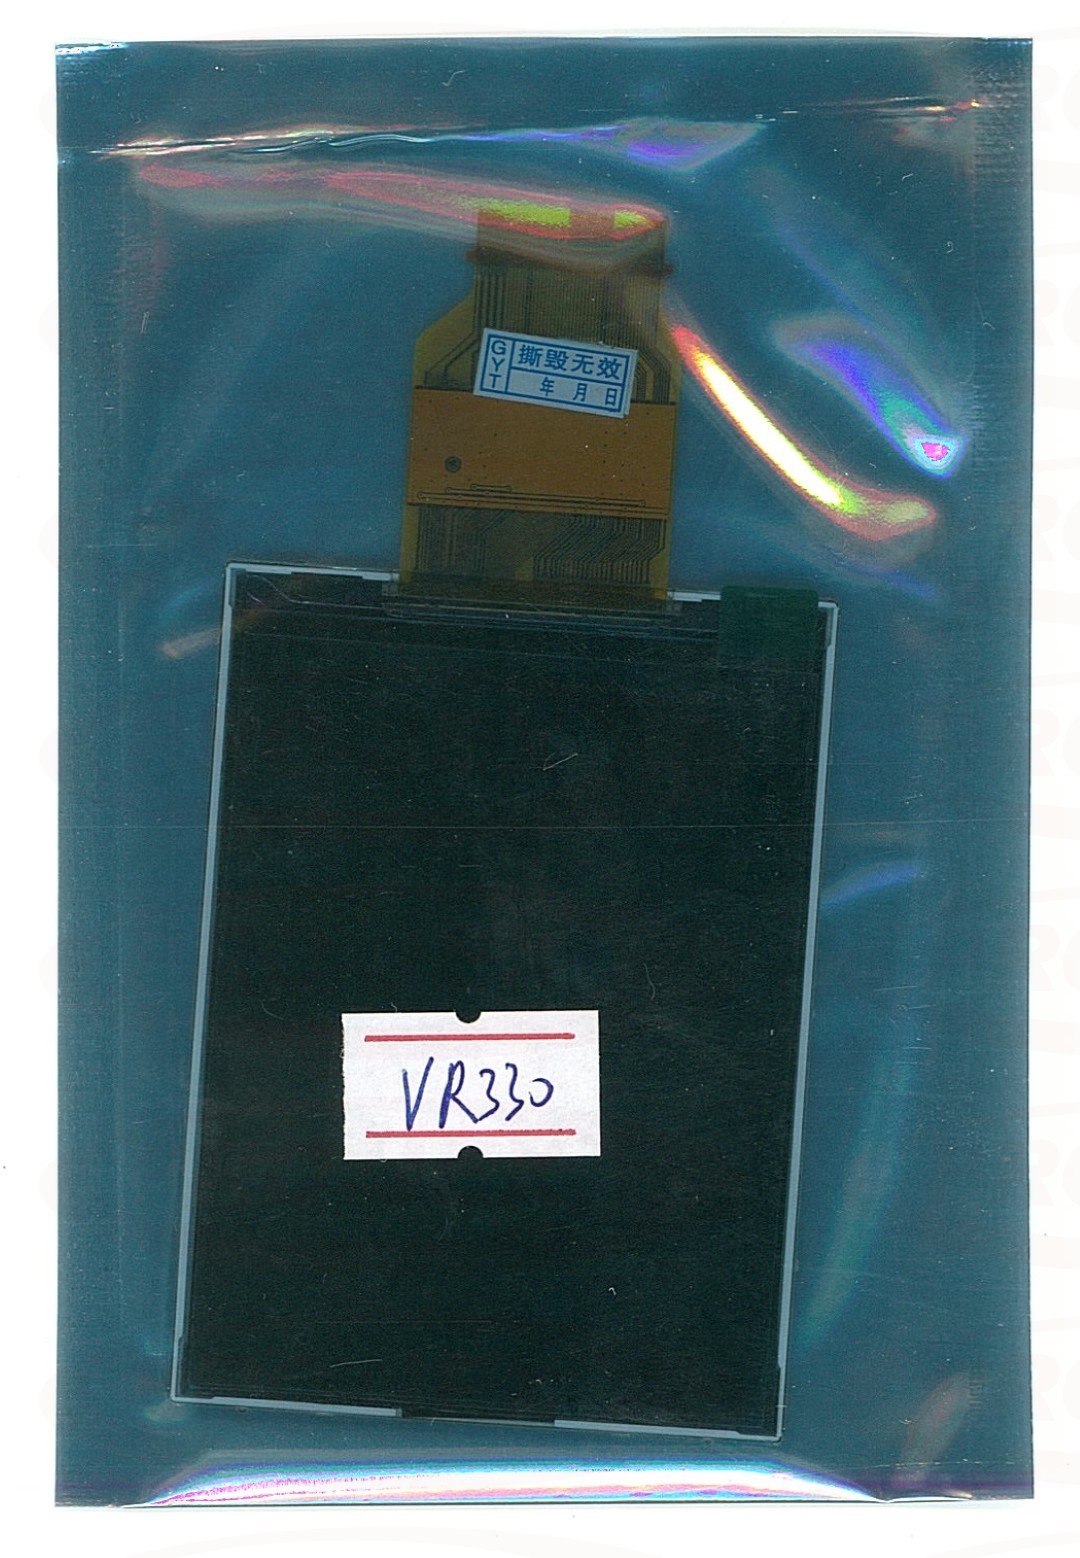 LCD OLYMPUS VR330